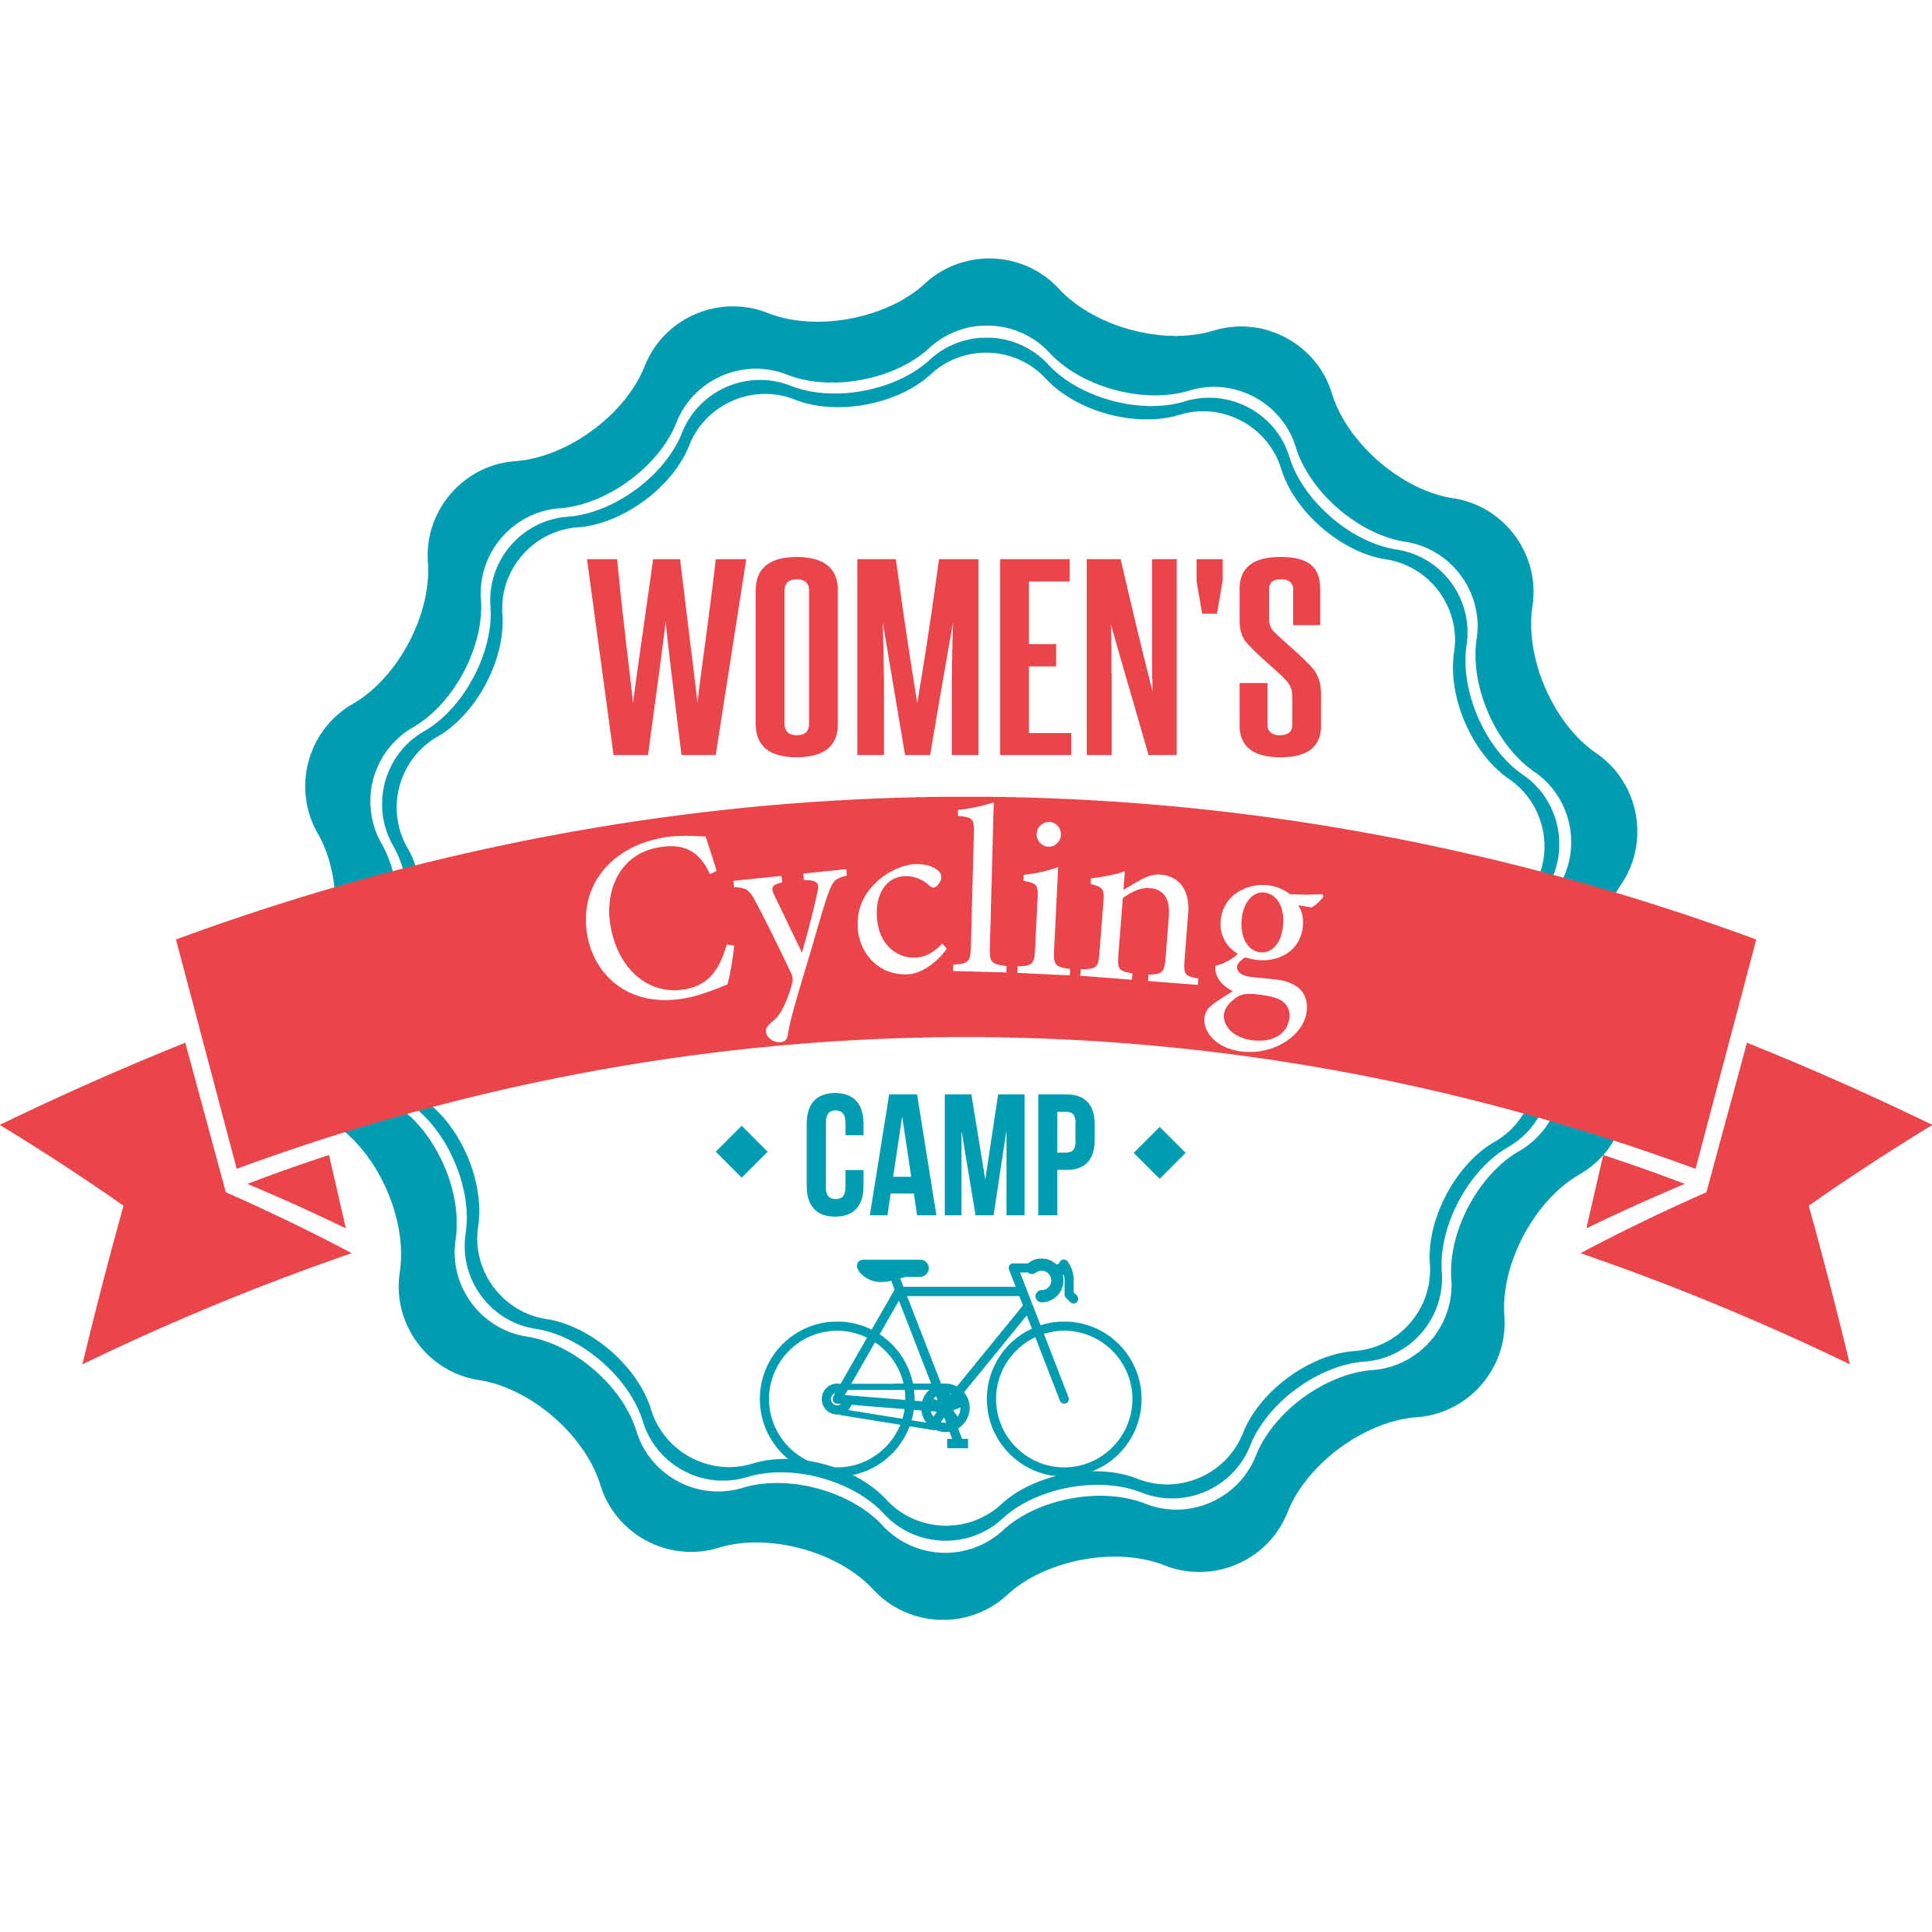 Neues Women’s Cycling Camp im Schwarzwald